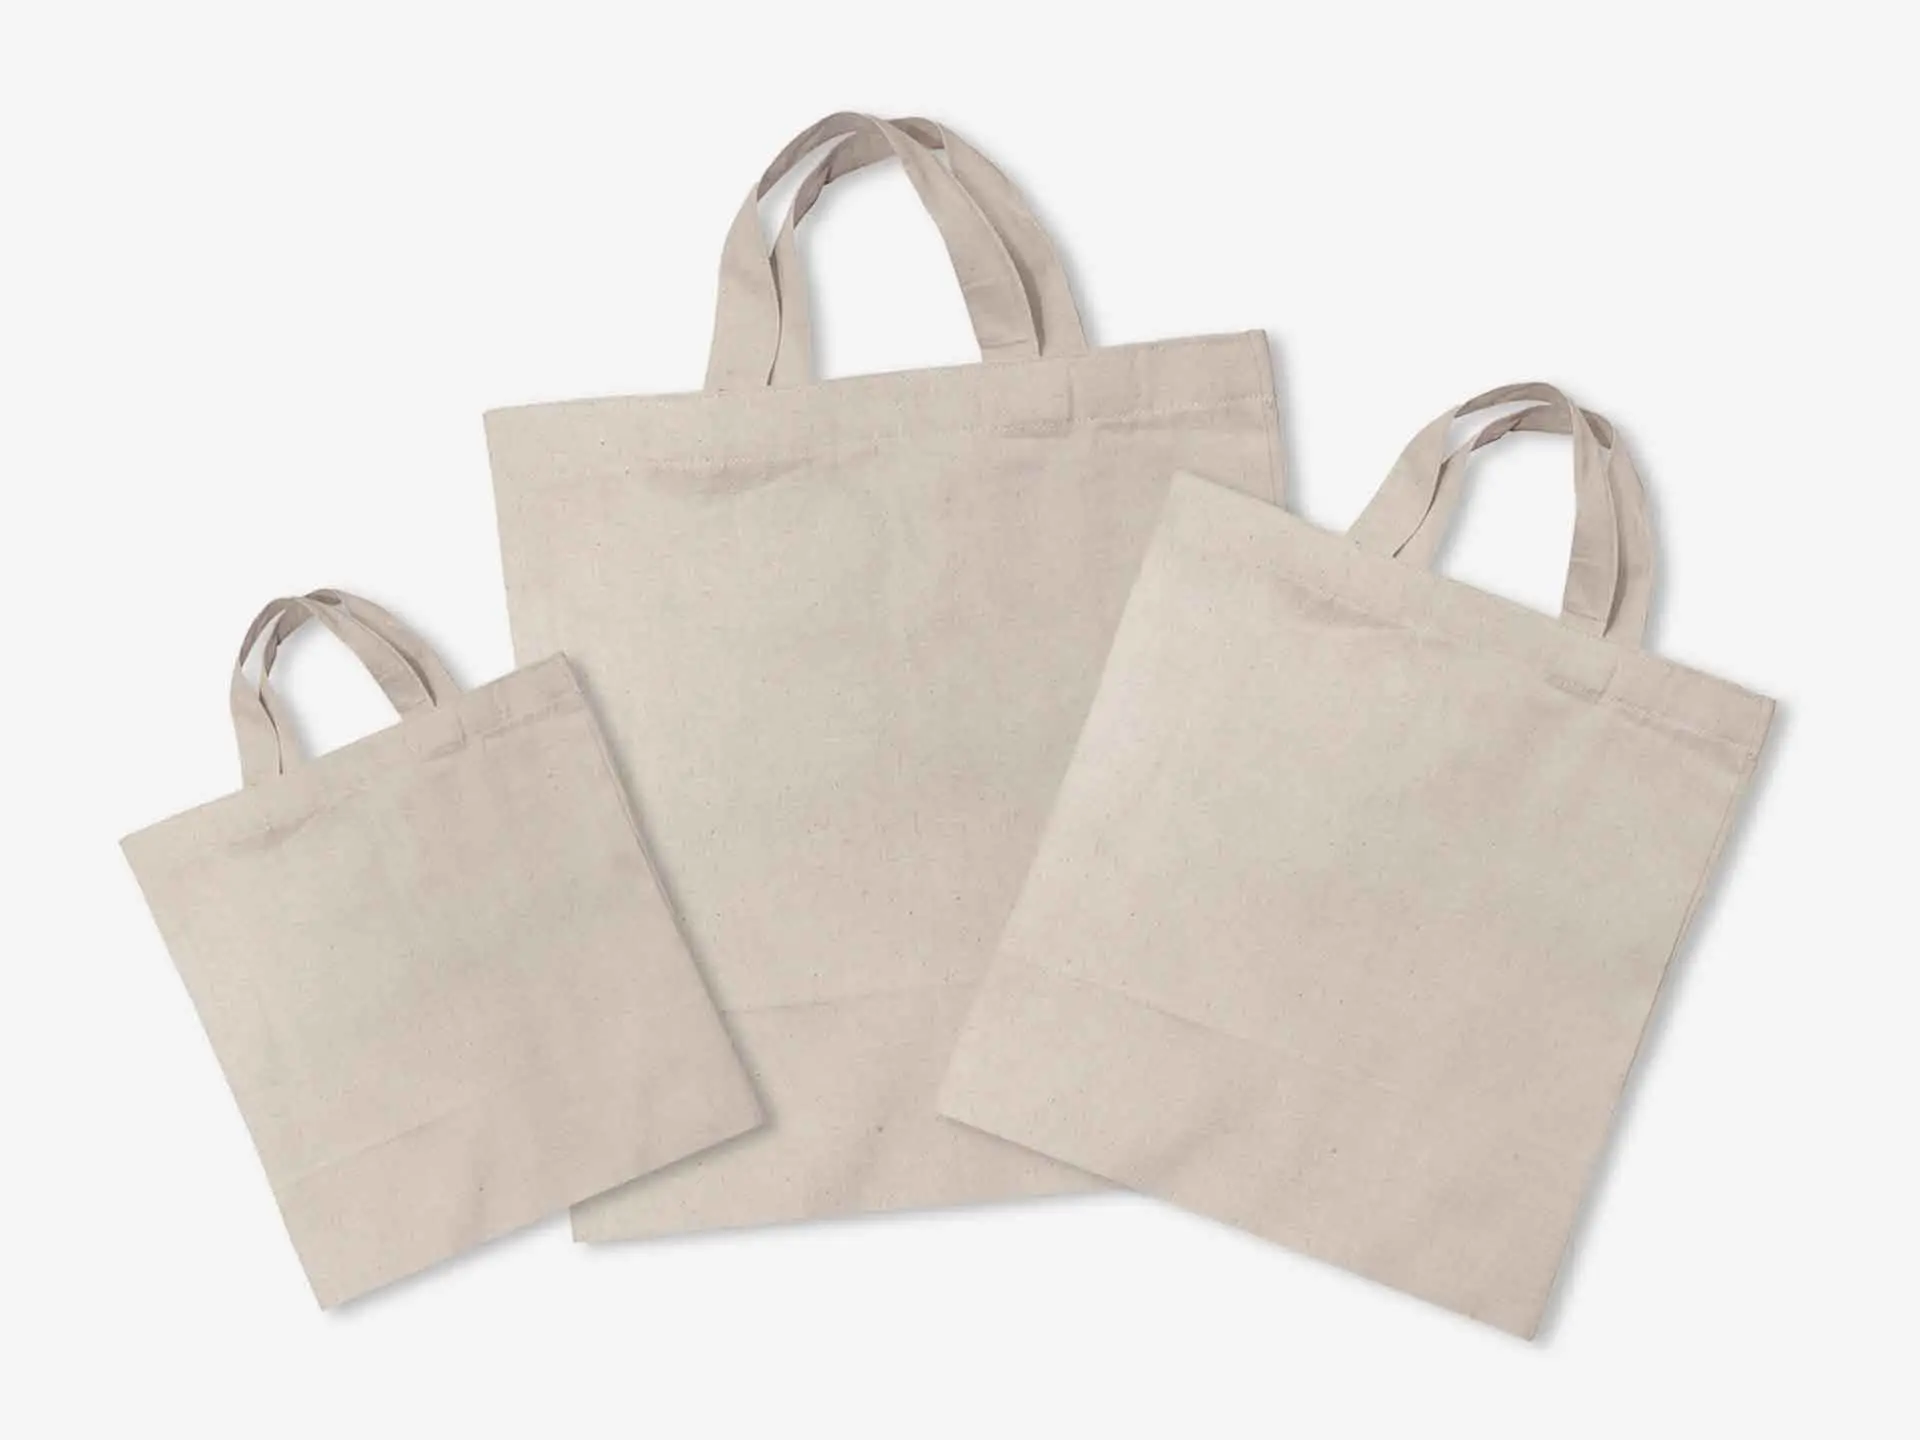 Cotton Carry Bag Samples